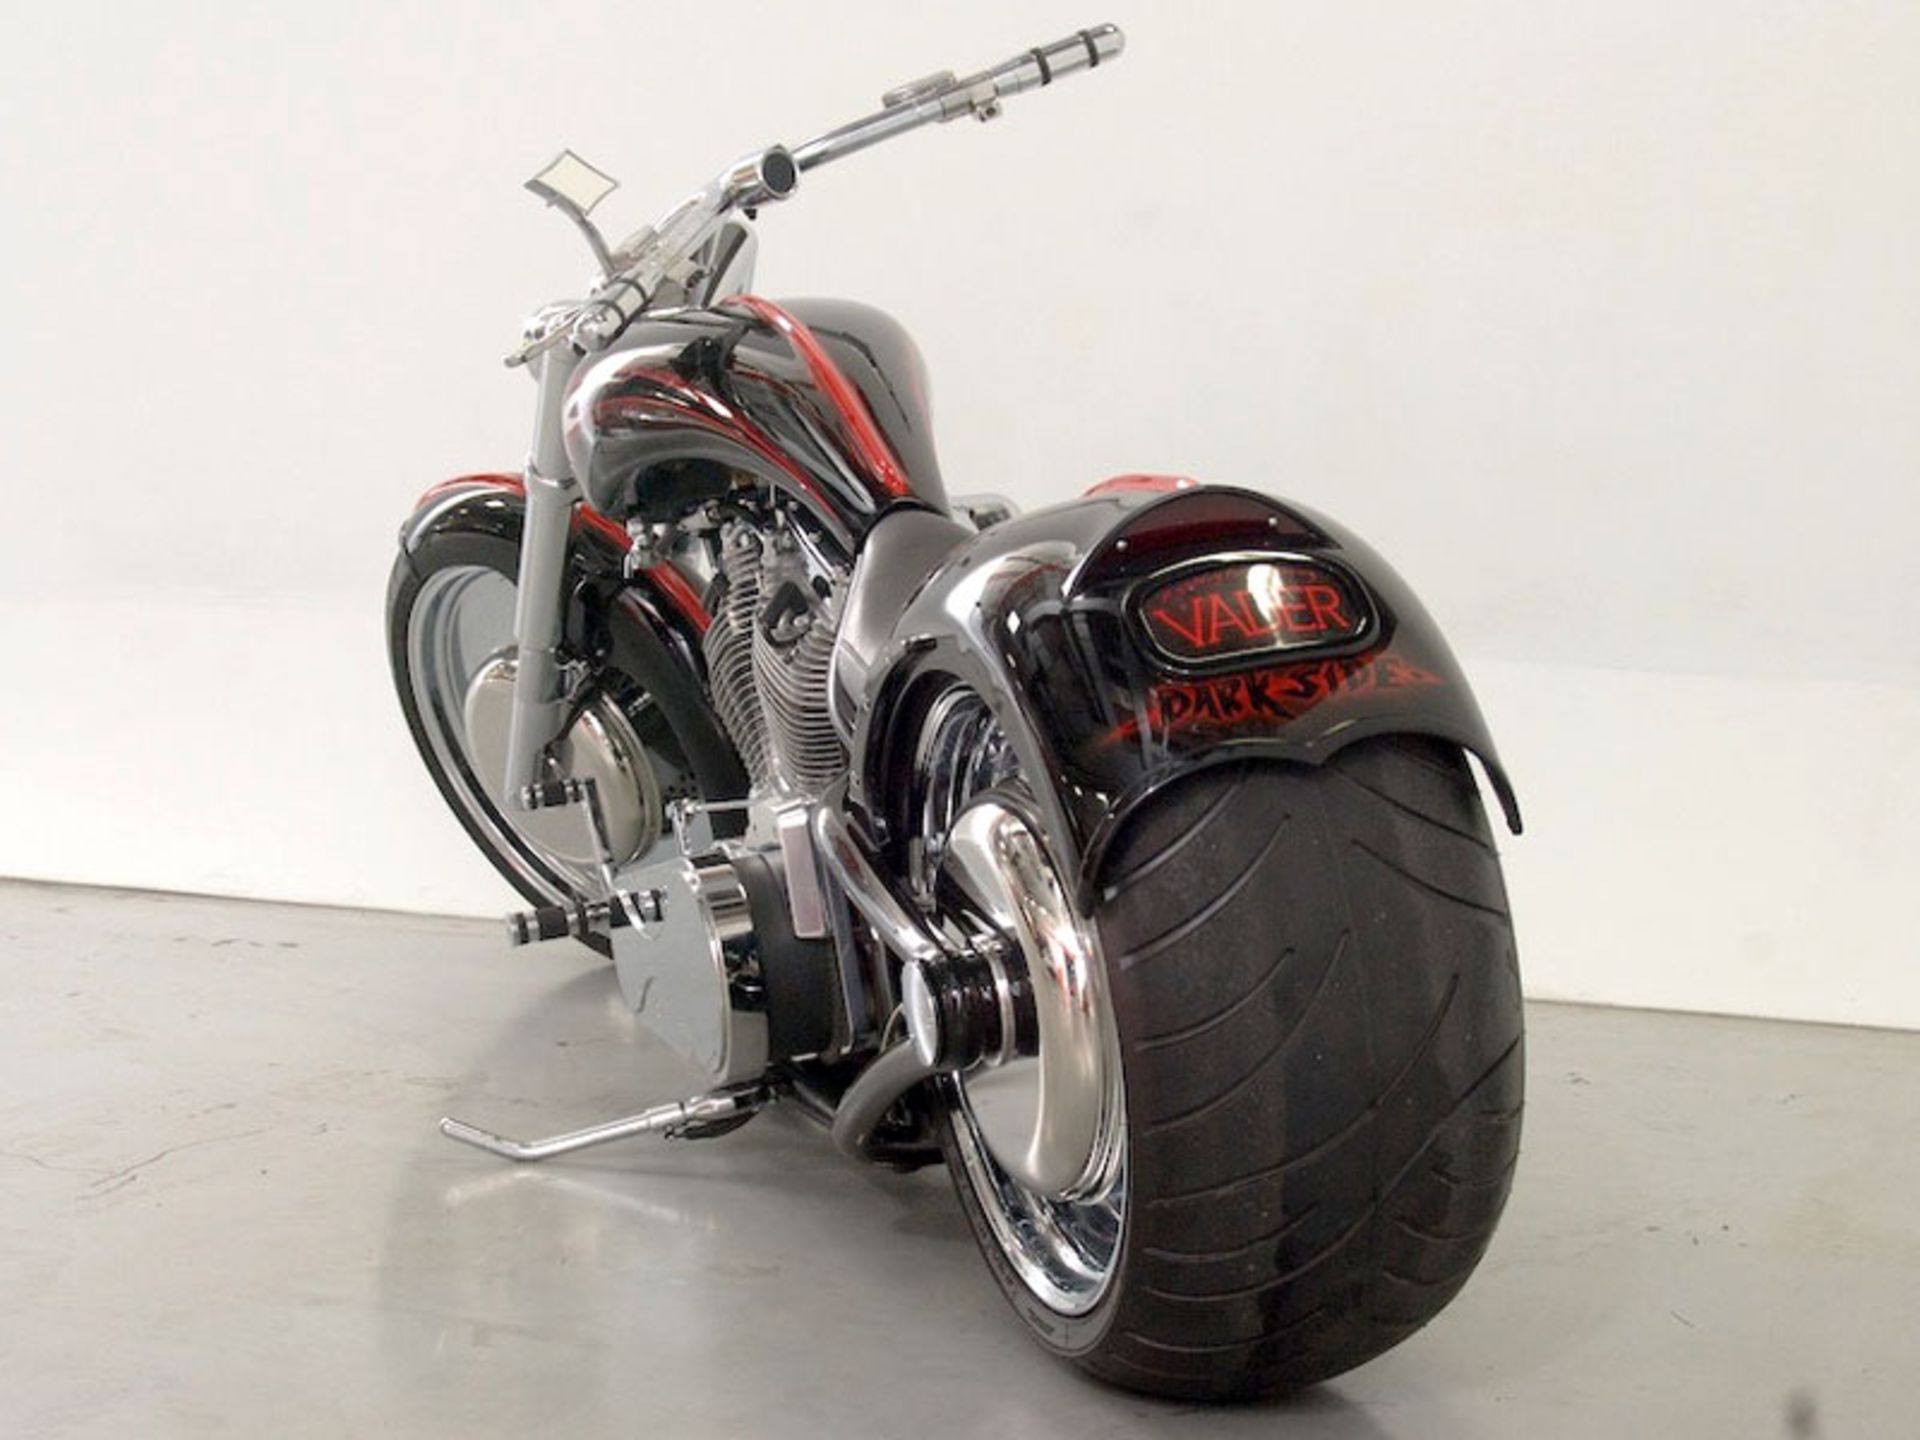 2005 Harley Davidson Custom 'Darth Vader' - Image 2 of 4